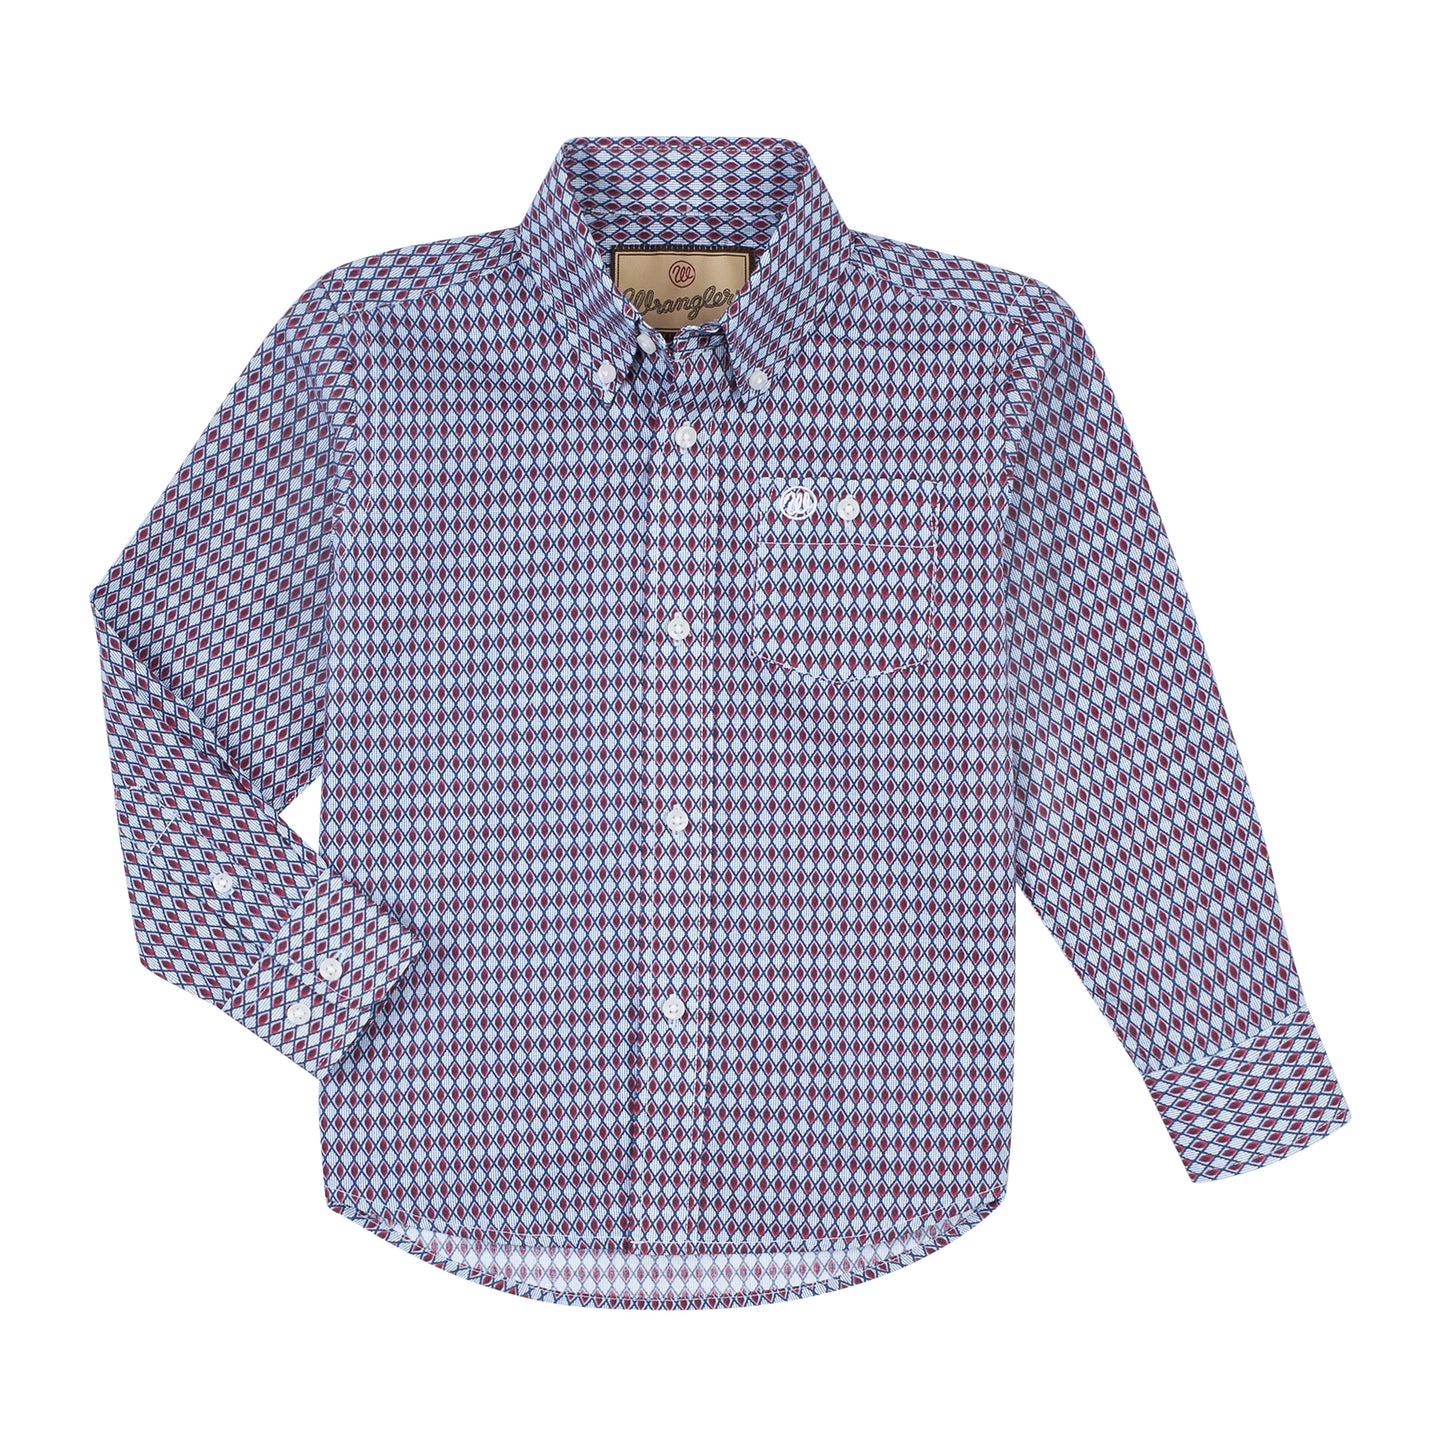 bgb871m Boy's Long Sleeve Button Shirt by Wrangler